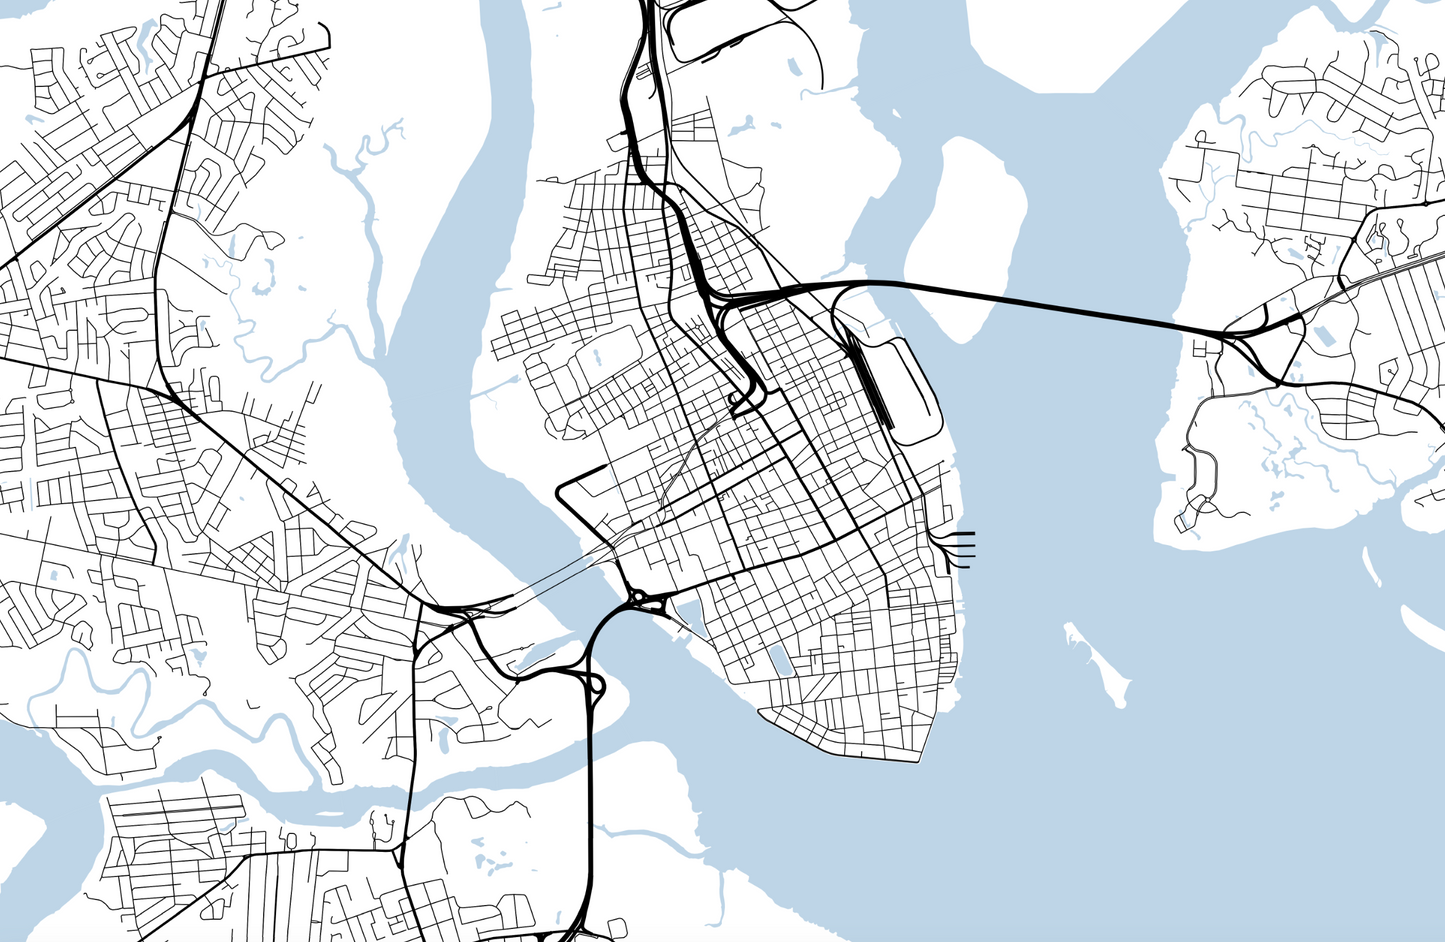 Charleston South Carolina Map Print